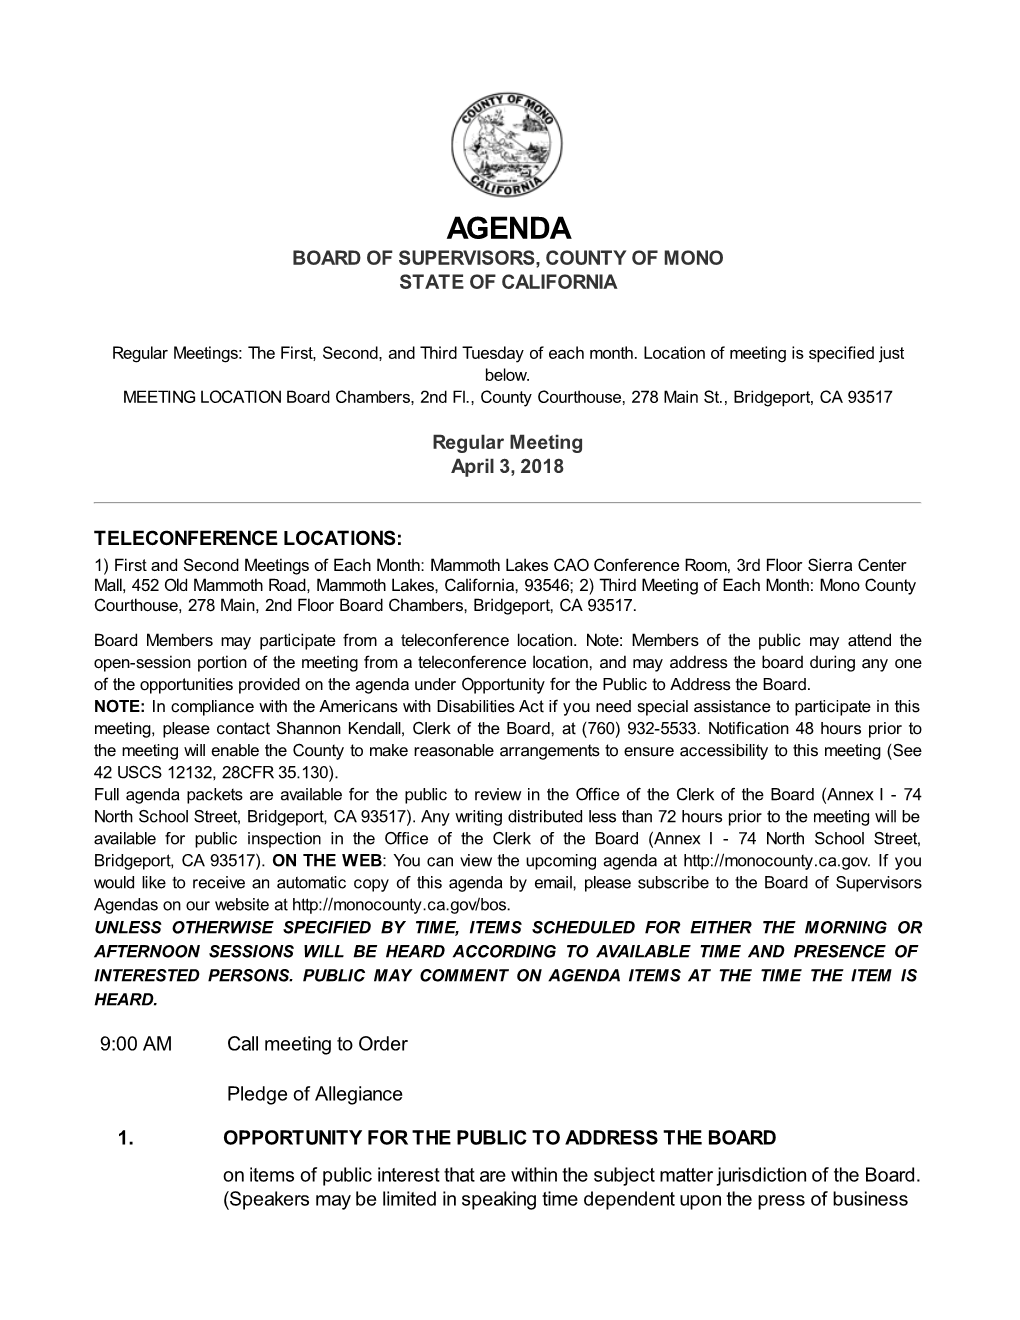 Agenda Board of Supervisors, County of Mono State of California